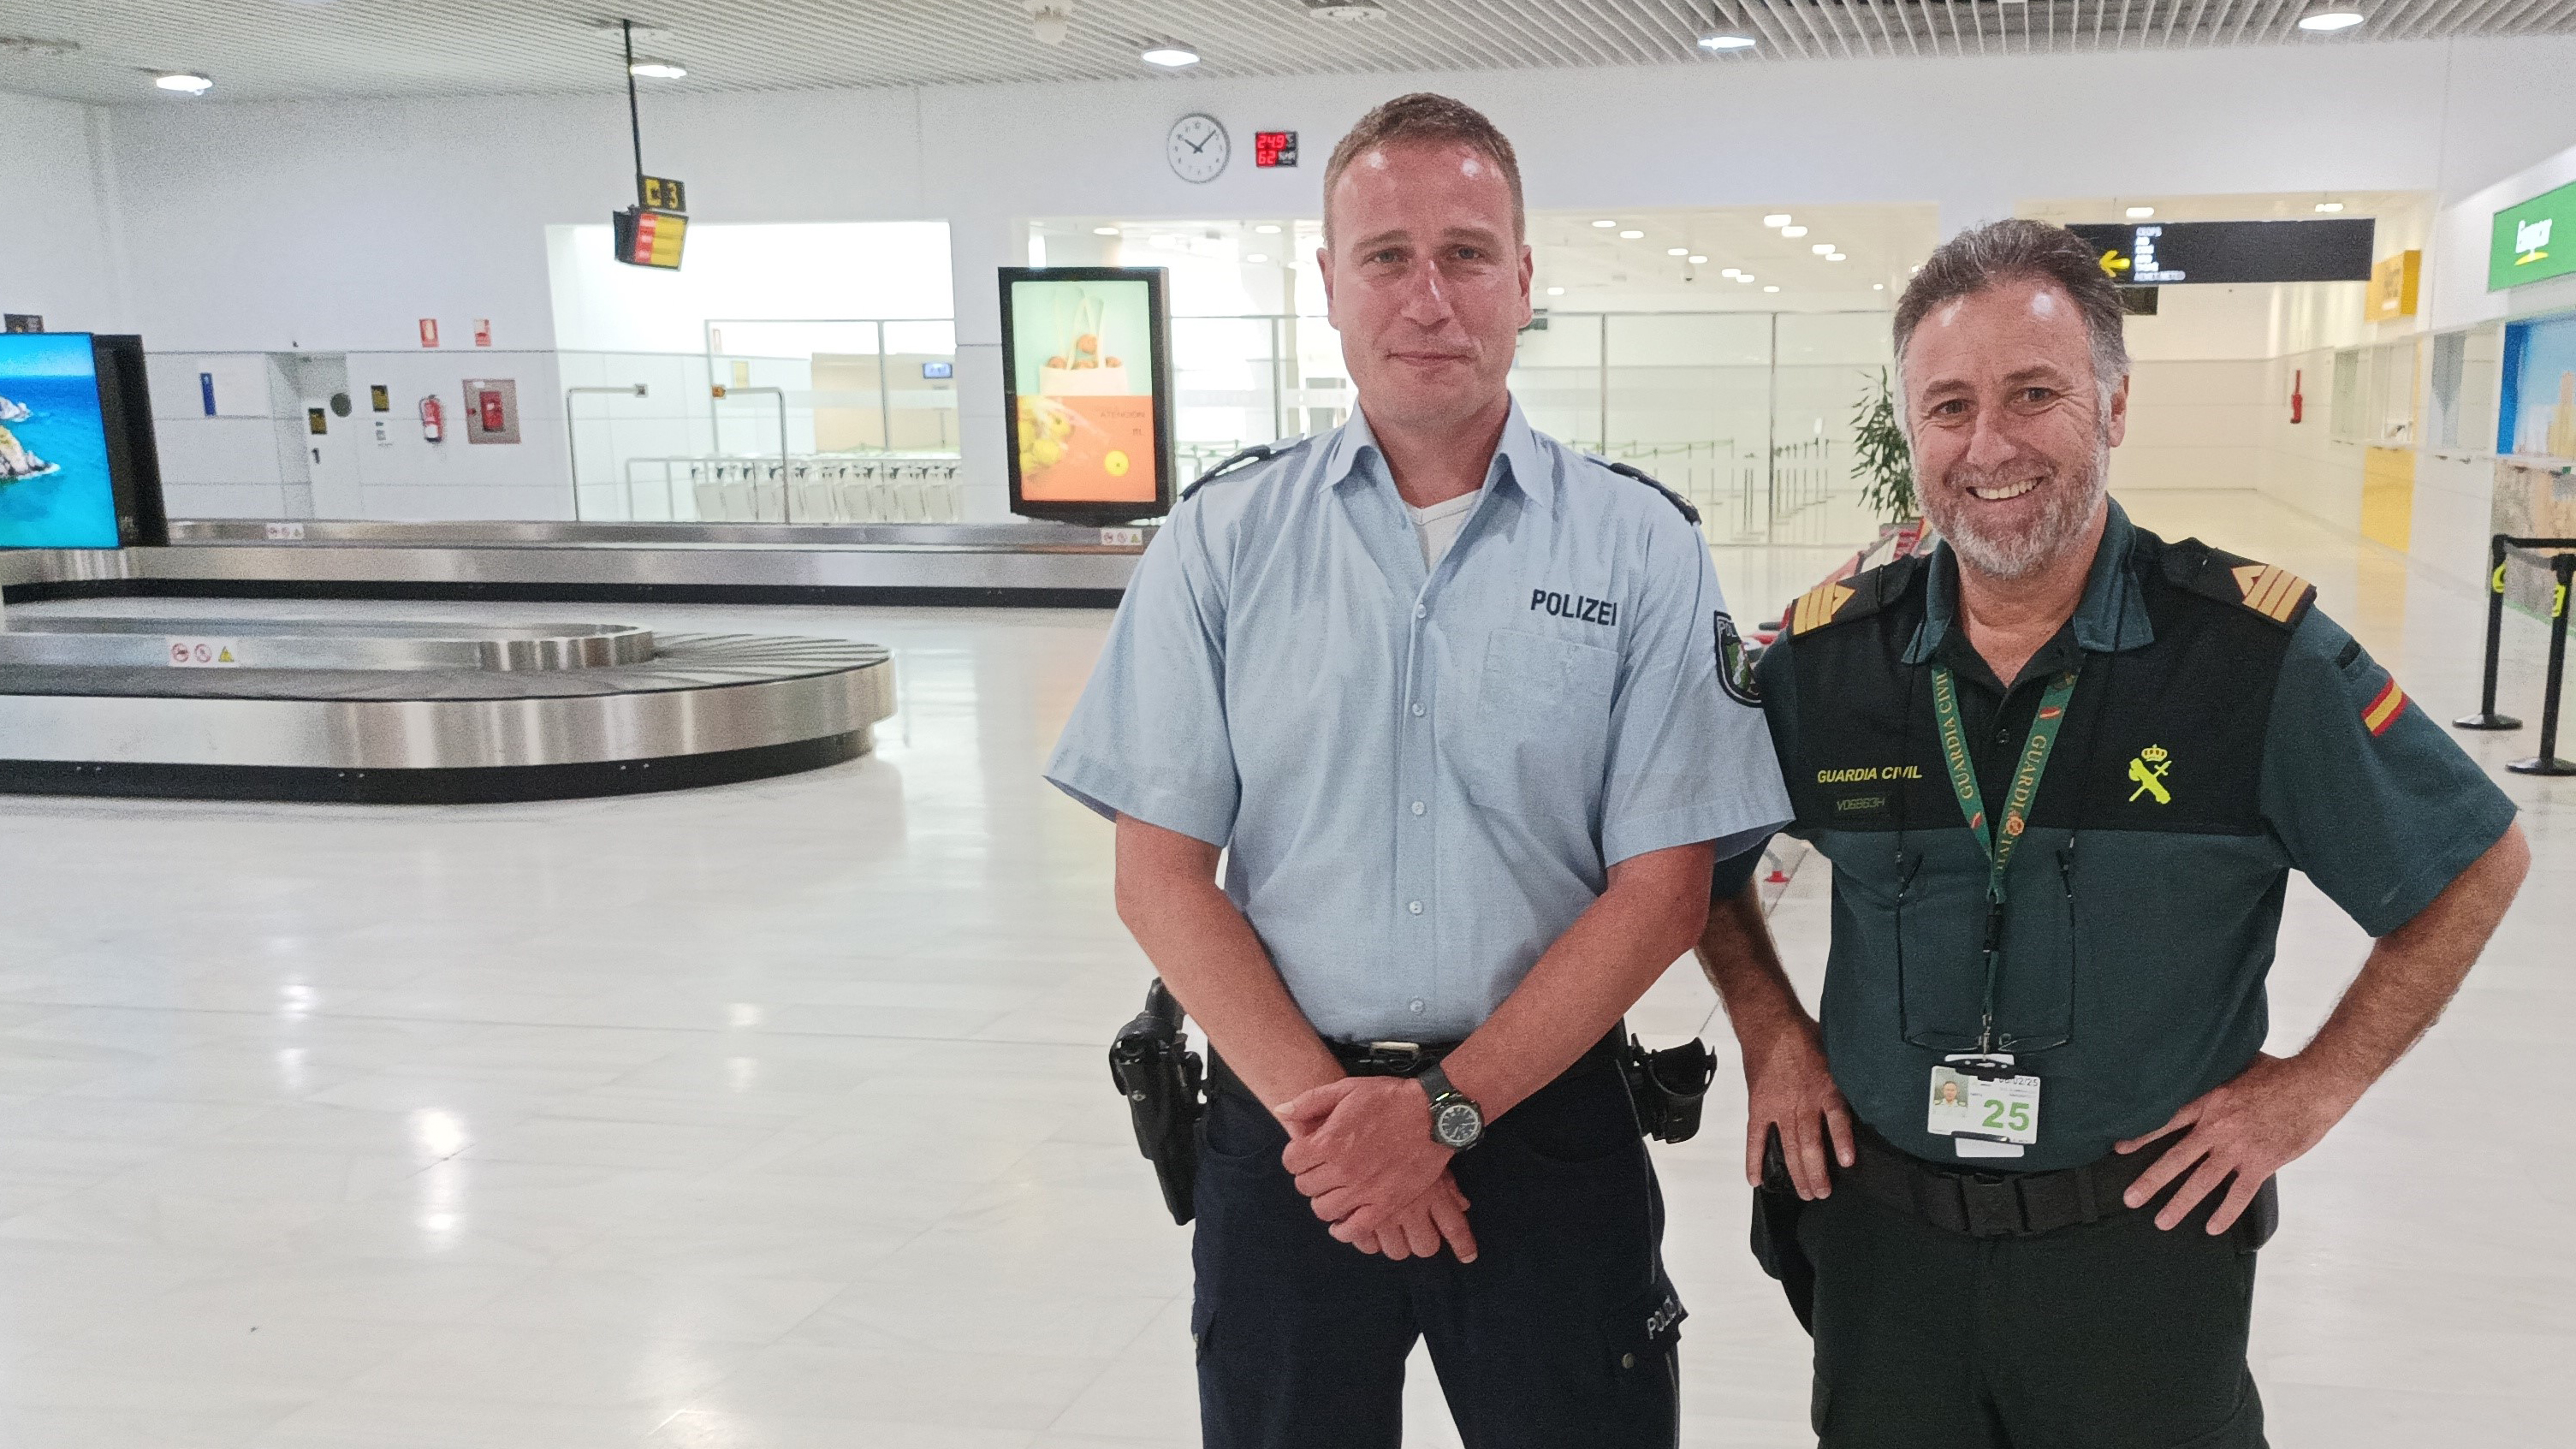 Patrol at the airport